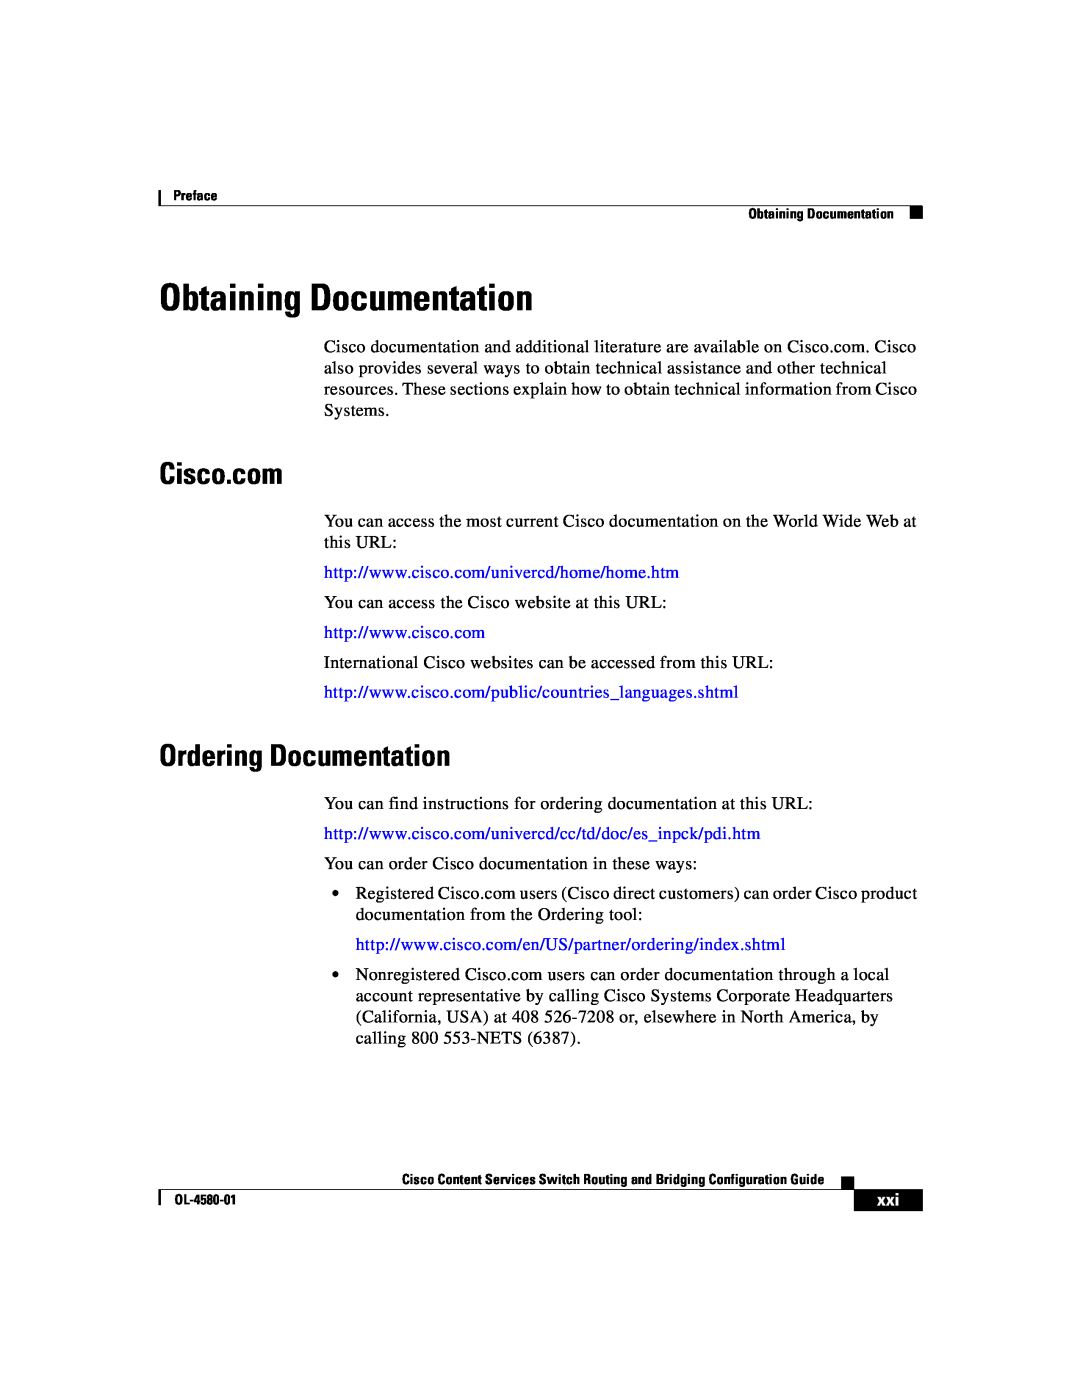 Cisco Systems OL-4580-01 manual Obtaining Documentation, Cisco.com, Ordering Documentation 